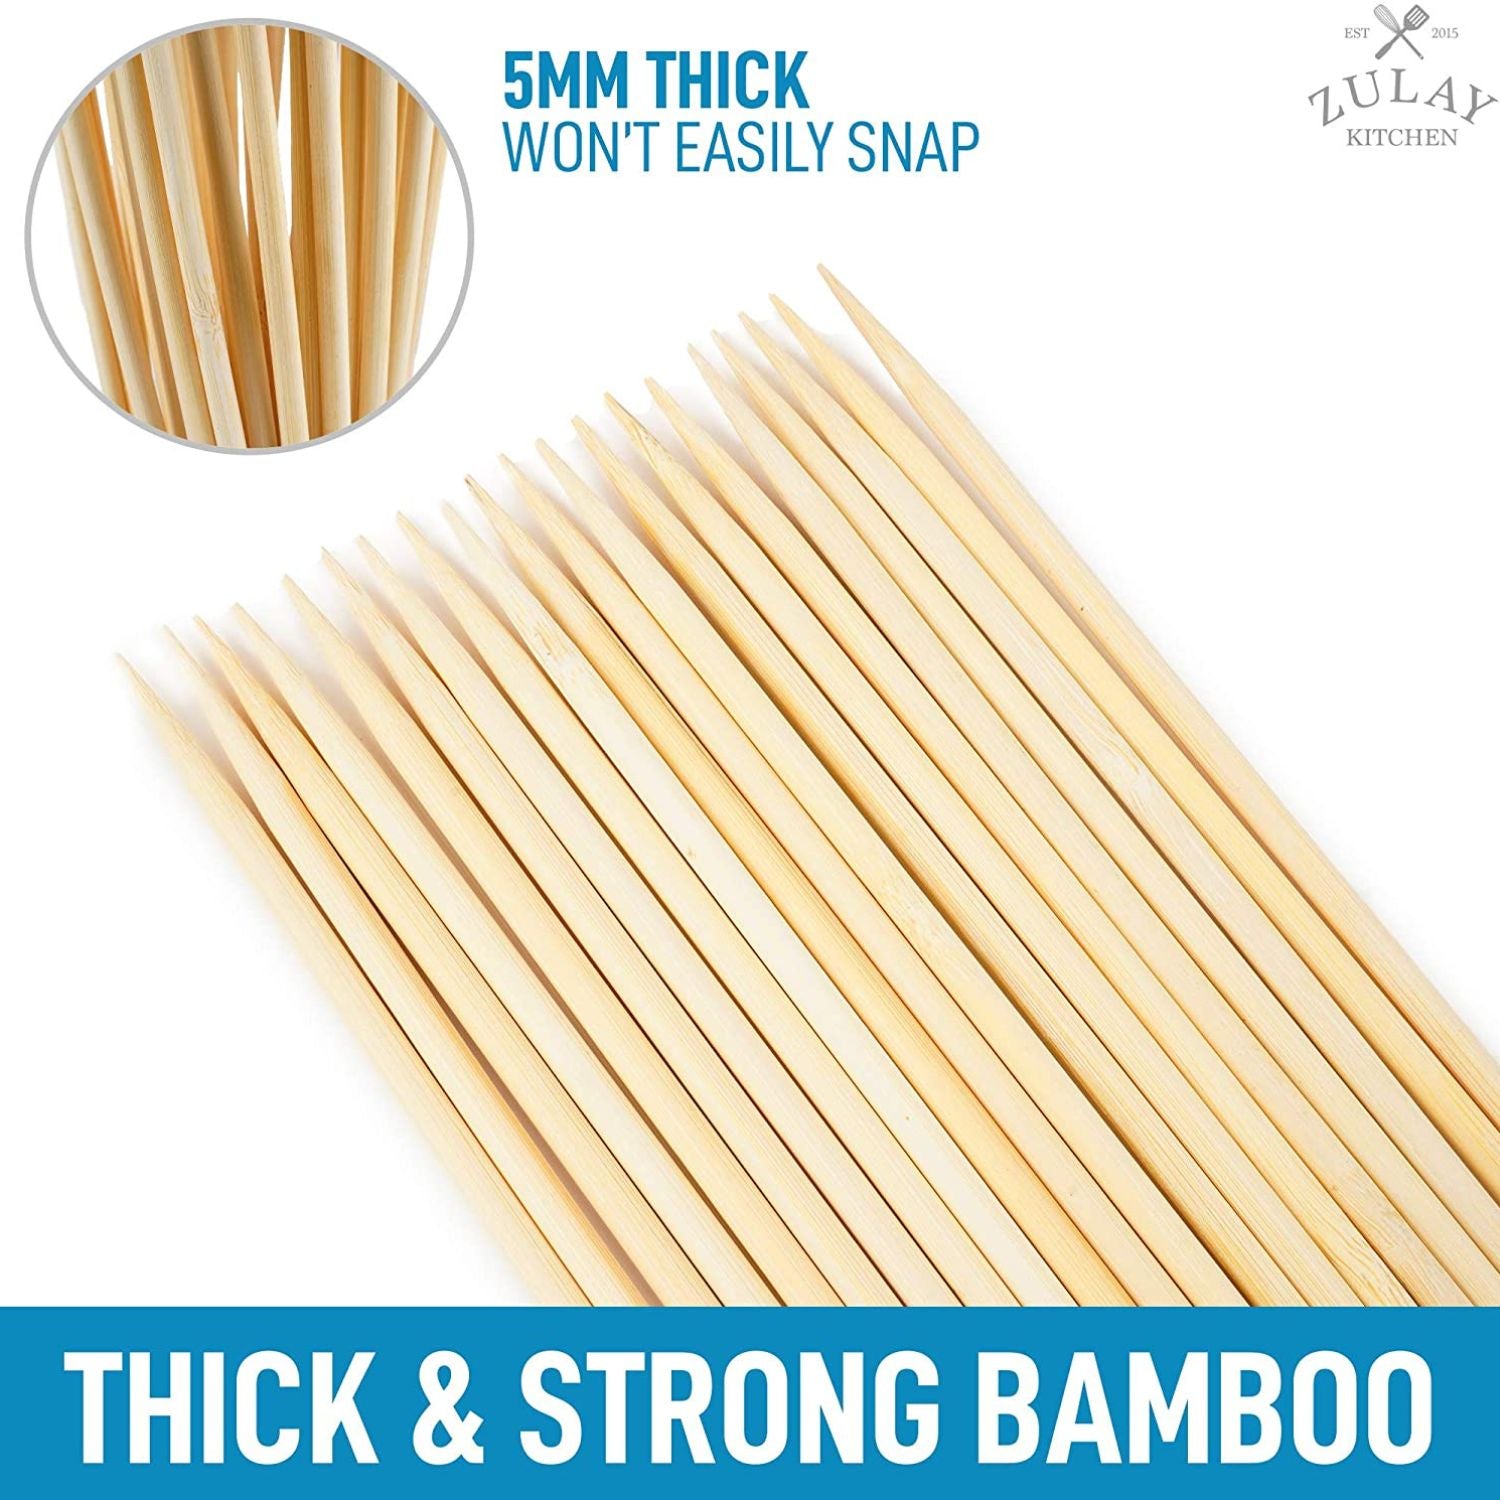 Extra Long Bamboo Roasting Sticks